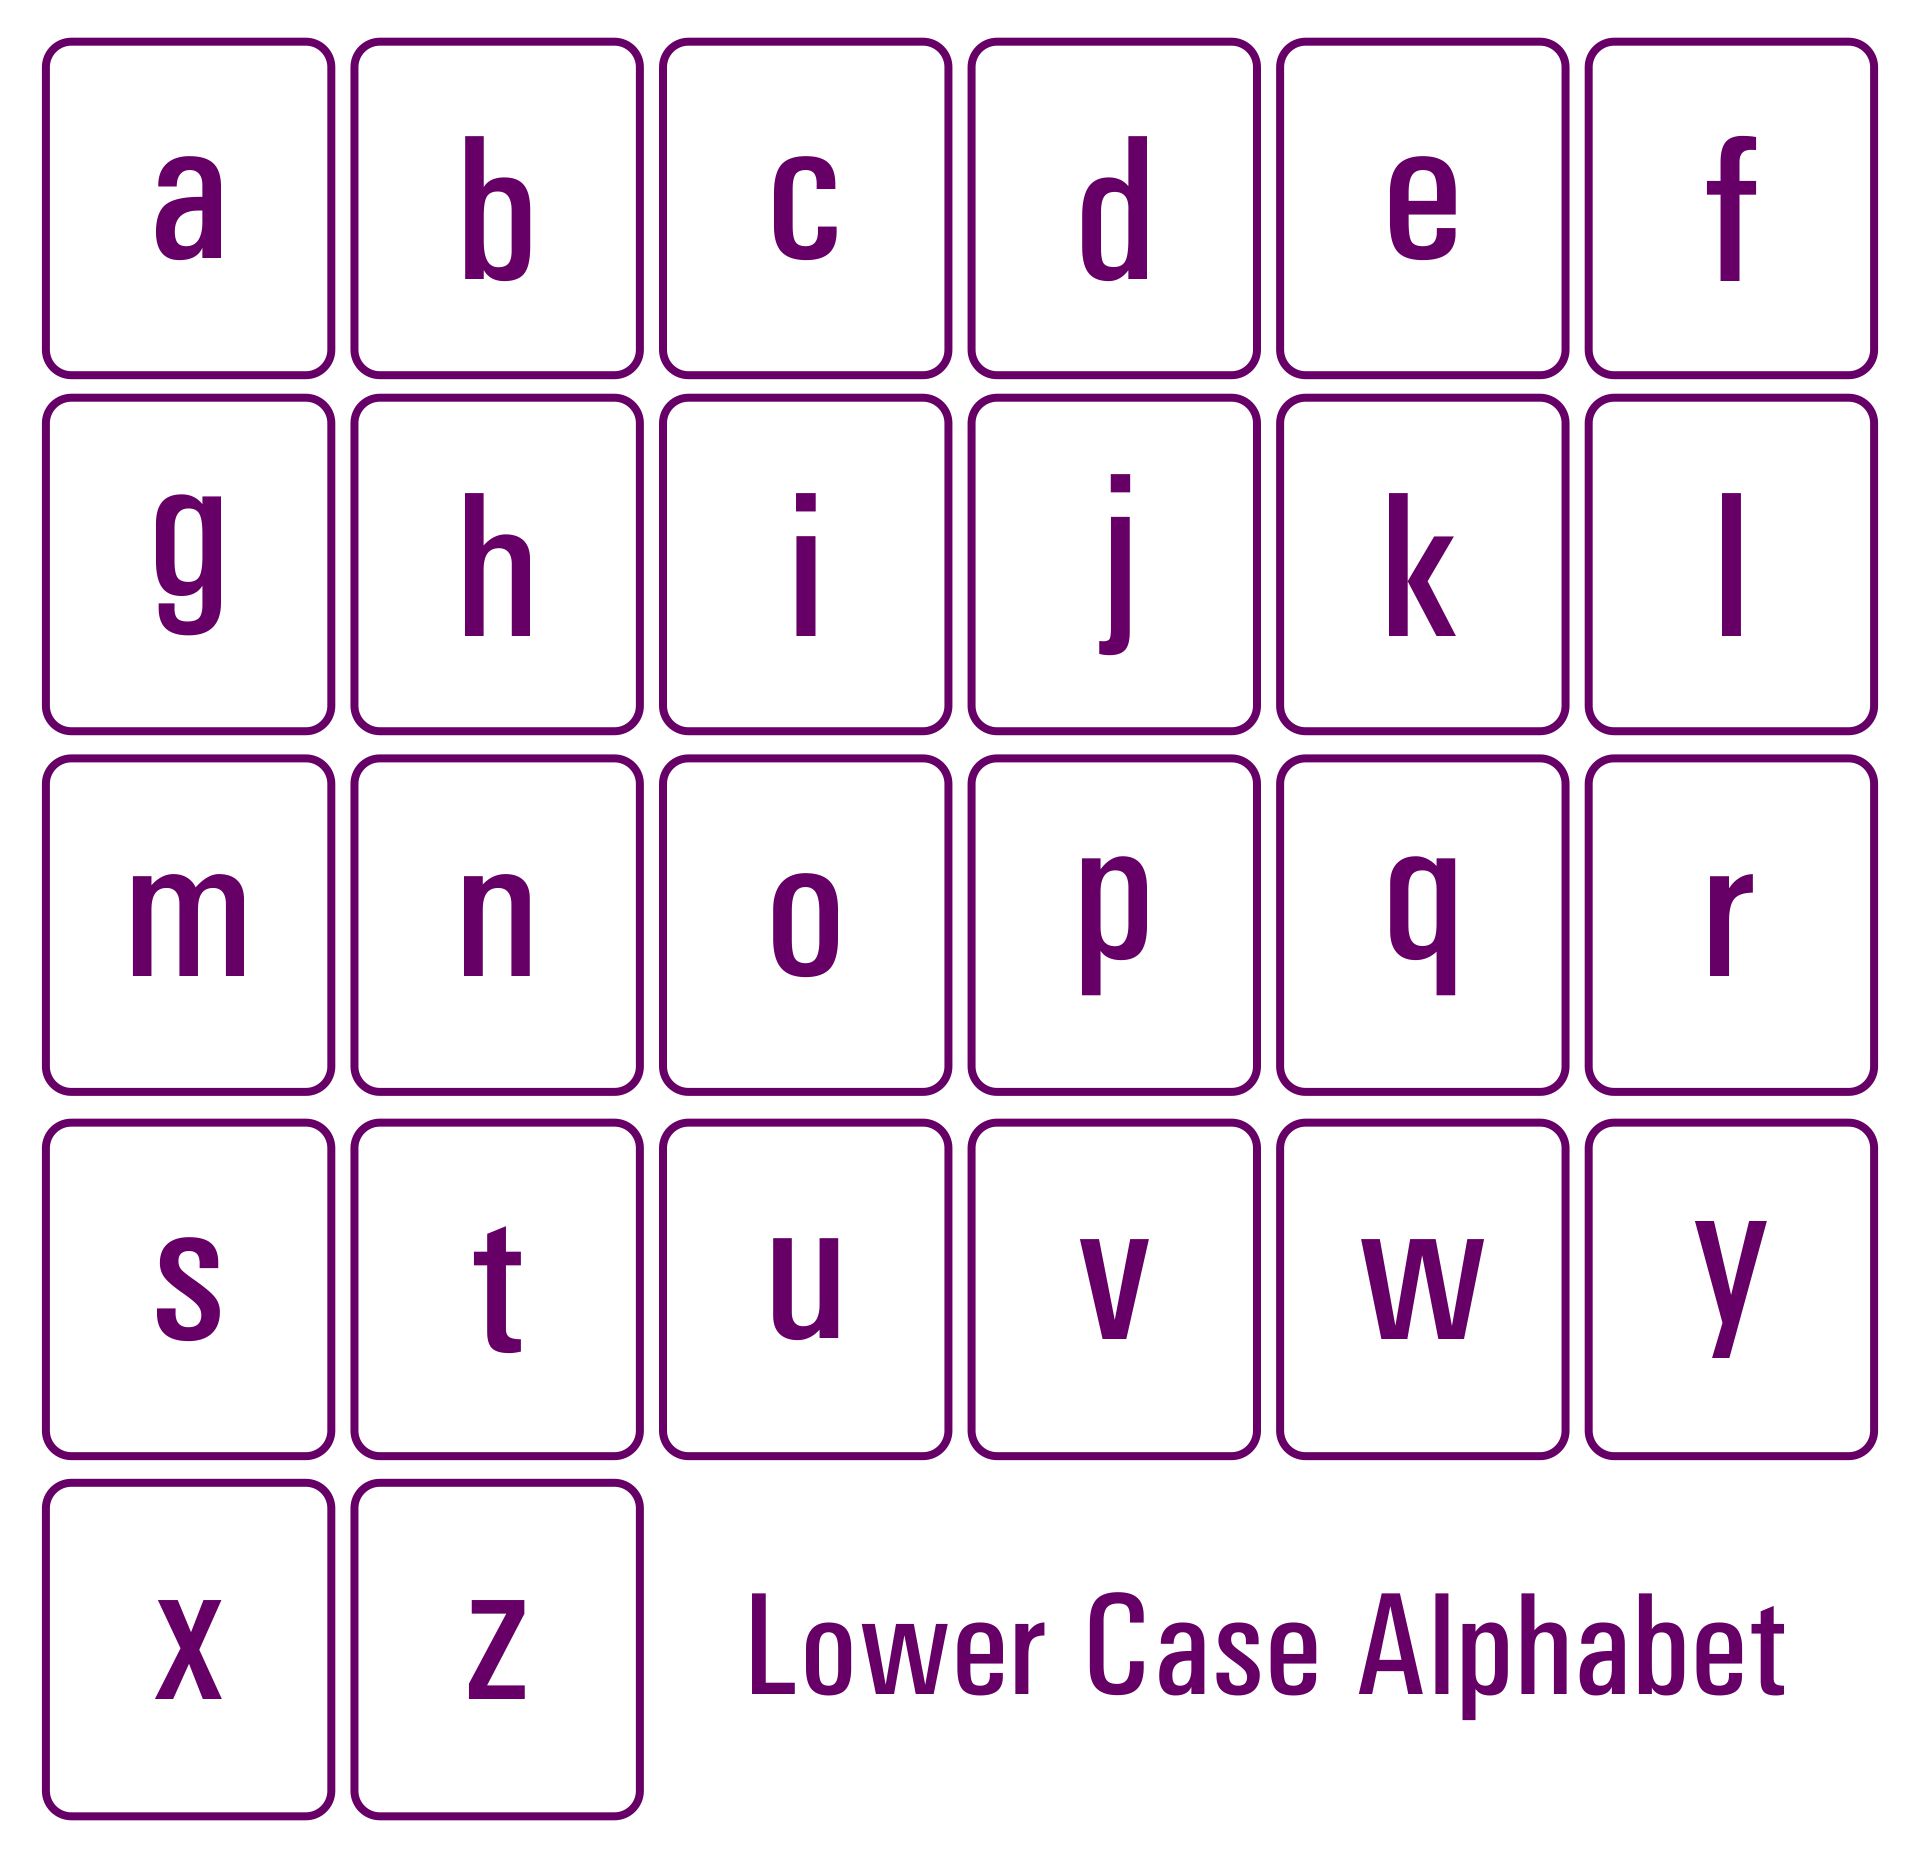 Lower Case Alphabet Flash Cards Pdf